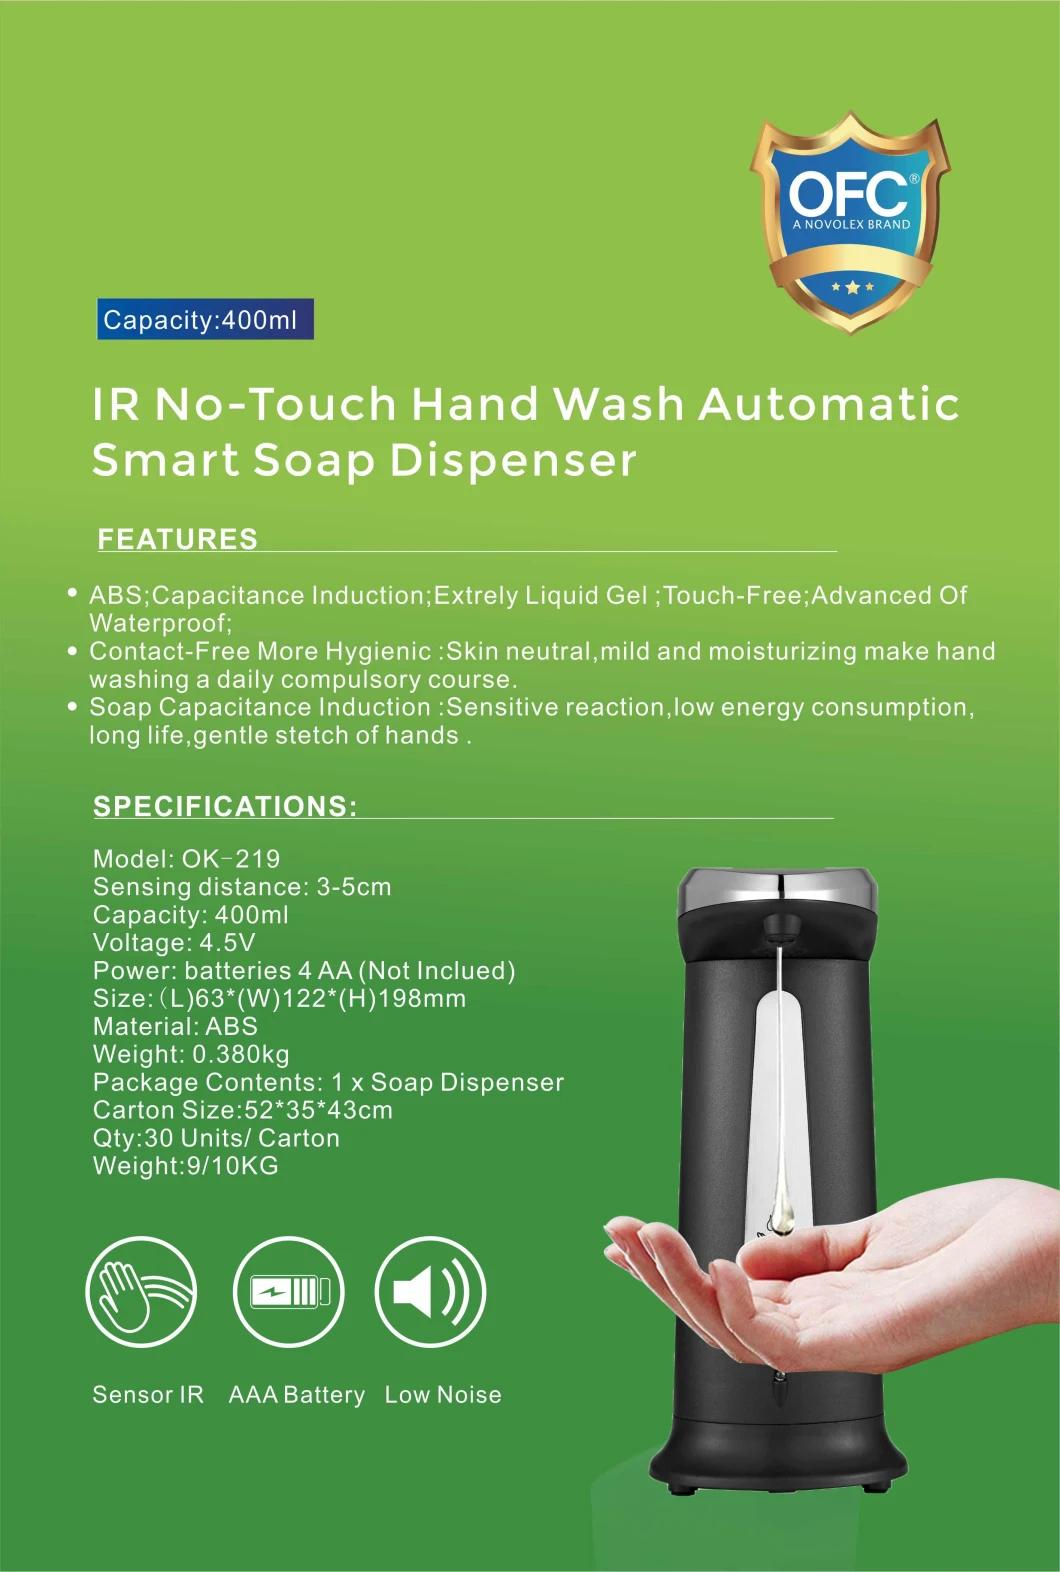 Bathroom Accessories Leak Proof Soap Dispenser Soap Container Soap Holder